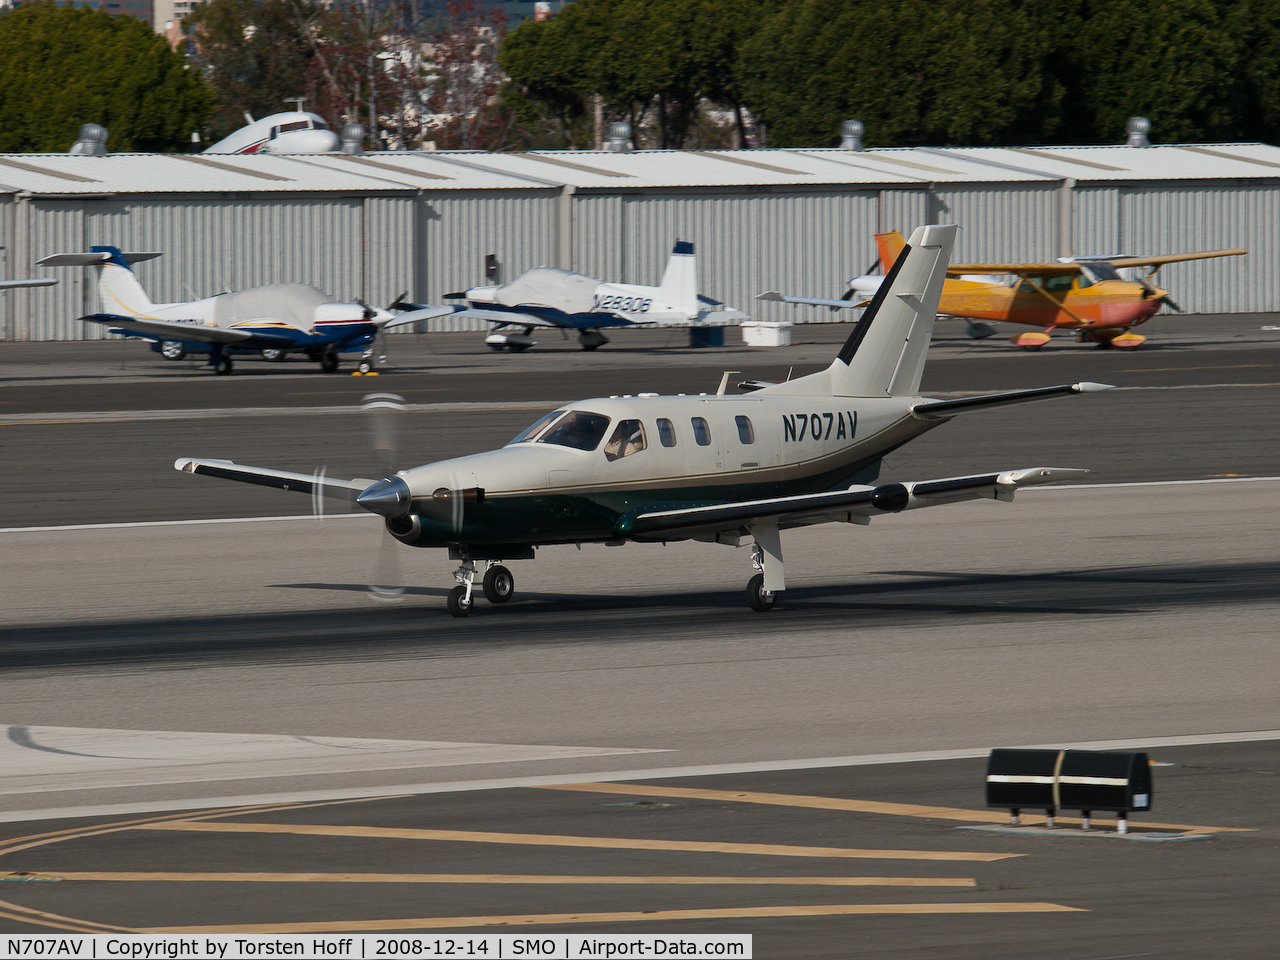 N707AV, 2001 Socata TBM-700 C/N 197, N707AV departing from RWY 21